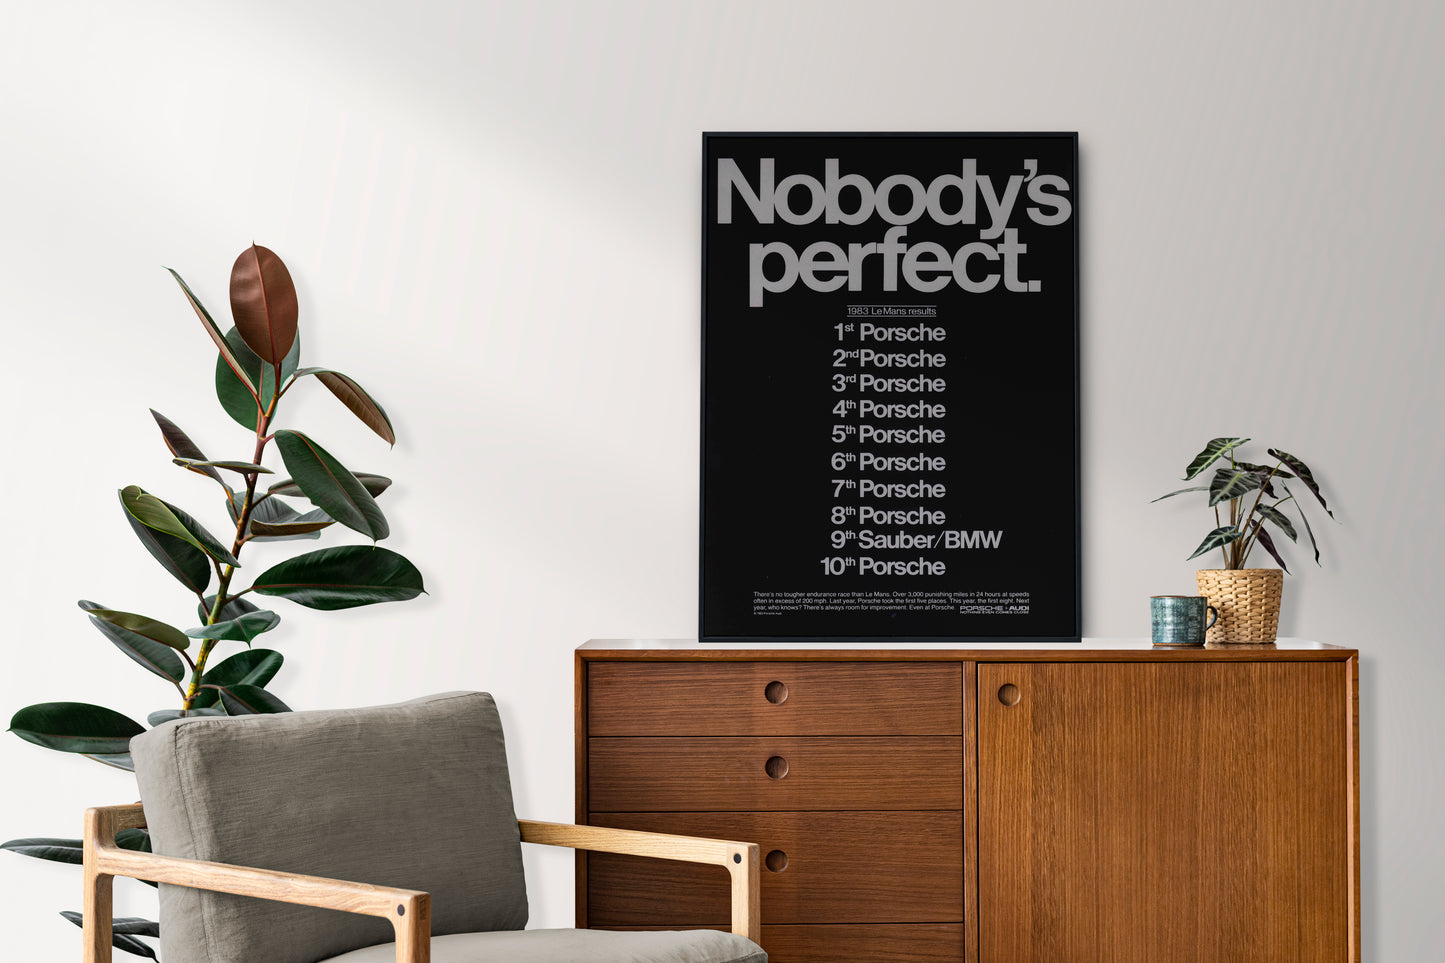 Porsche "Nobody's Perfect" Poster